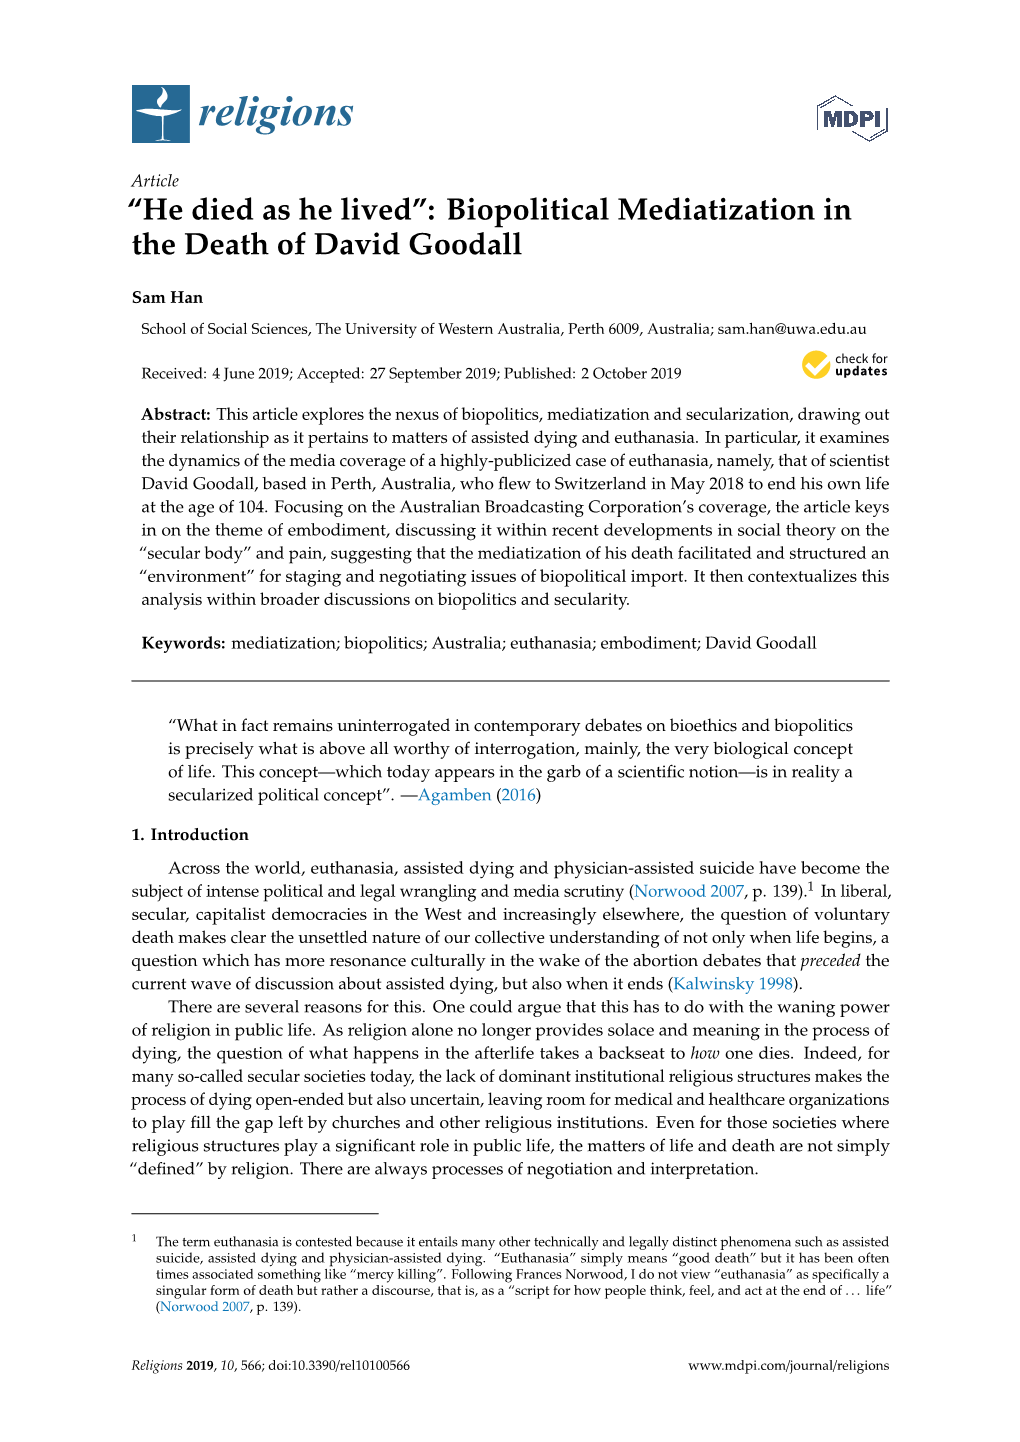 Biopolitical Mediatization in the Death of David Goodall